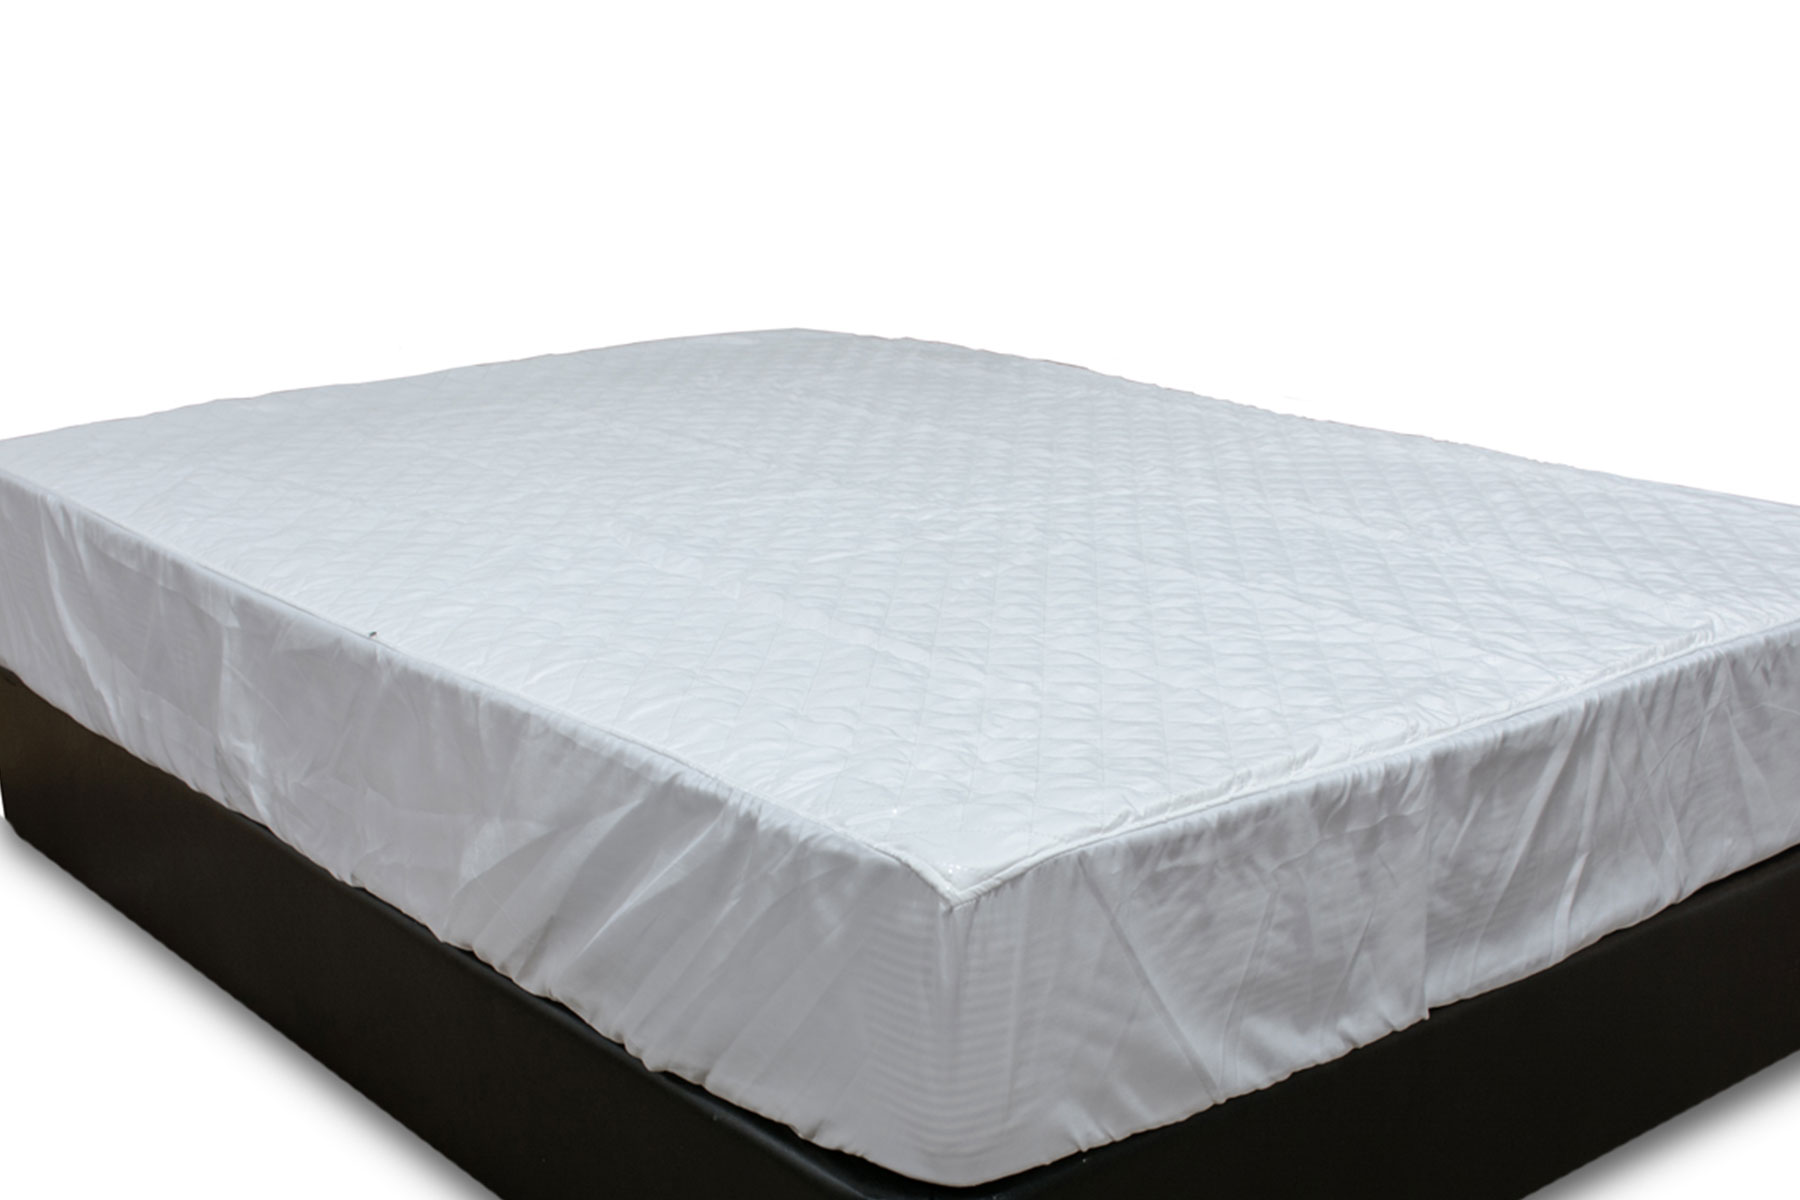 140 x 70 mattress protector